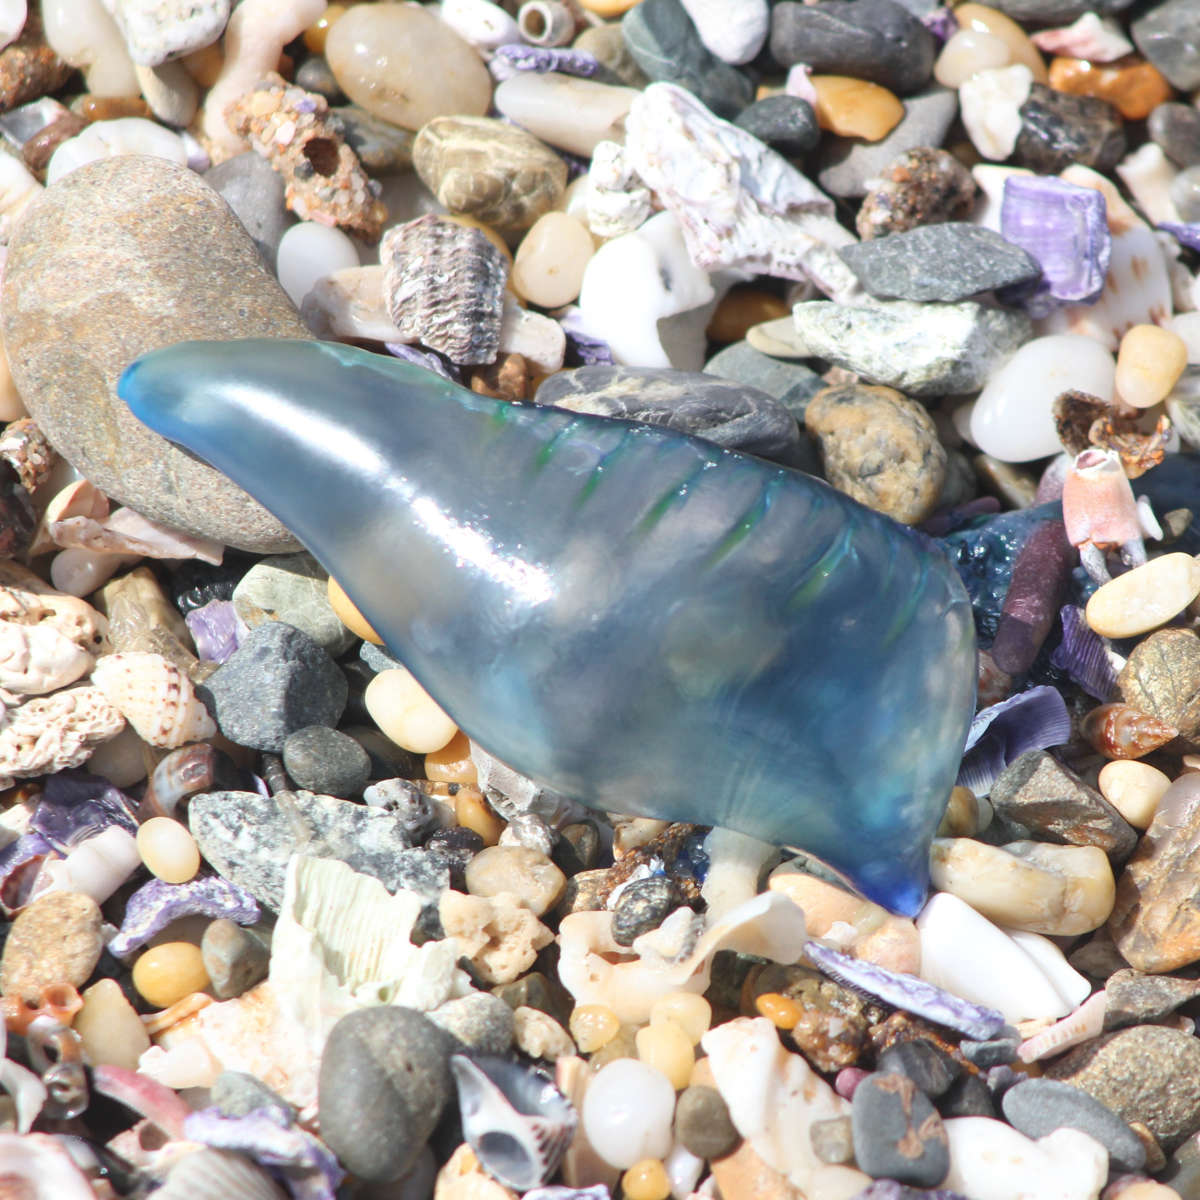 Bluebottle jellyfish amongst rocks and shells. Image: ImperatorMaxx.